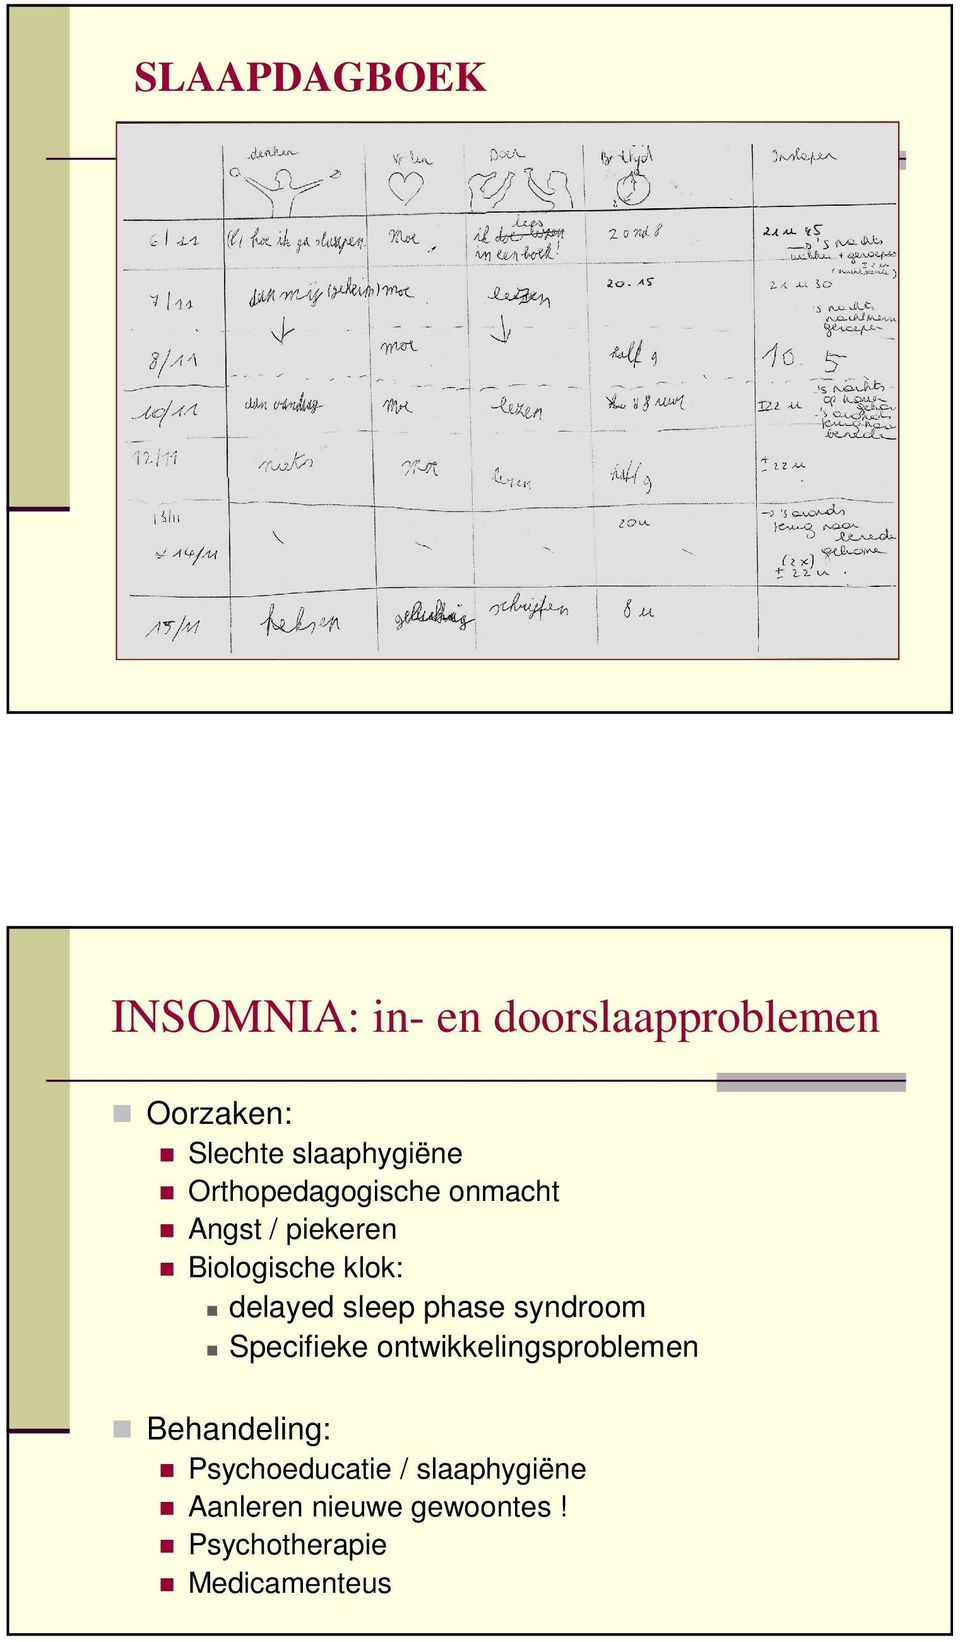 delayed sleep phase syndroom Specifieke ontwikkelingsproblemen Behandeling: